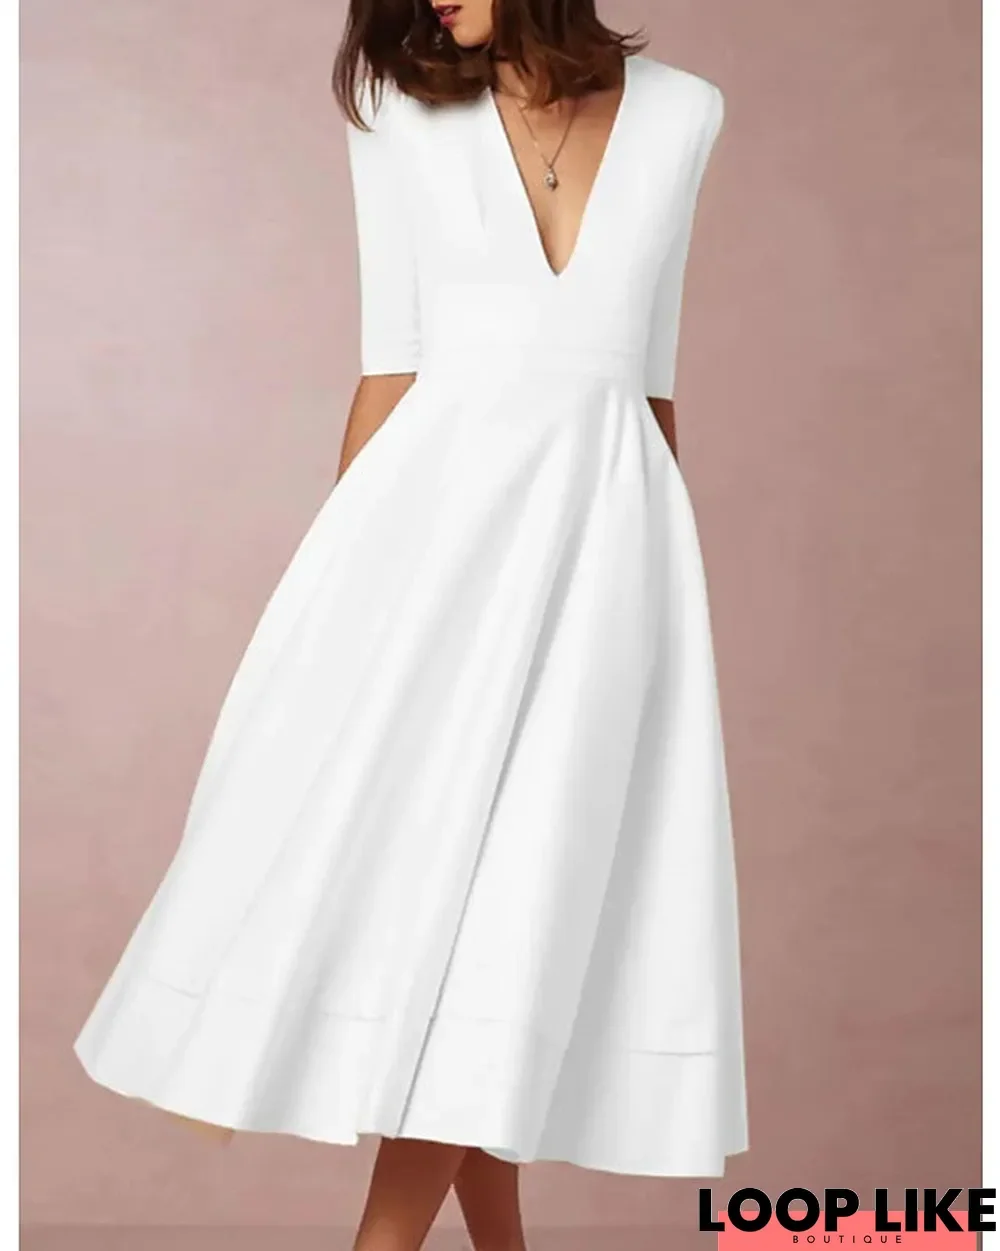 Women's Swing Dress Midi Dress Half Sleeve Solid Color Spring & Summer Hot White Dresses